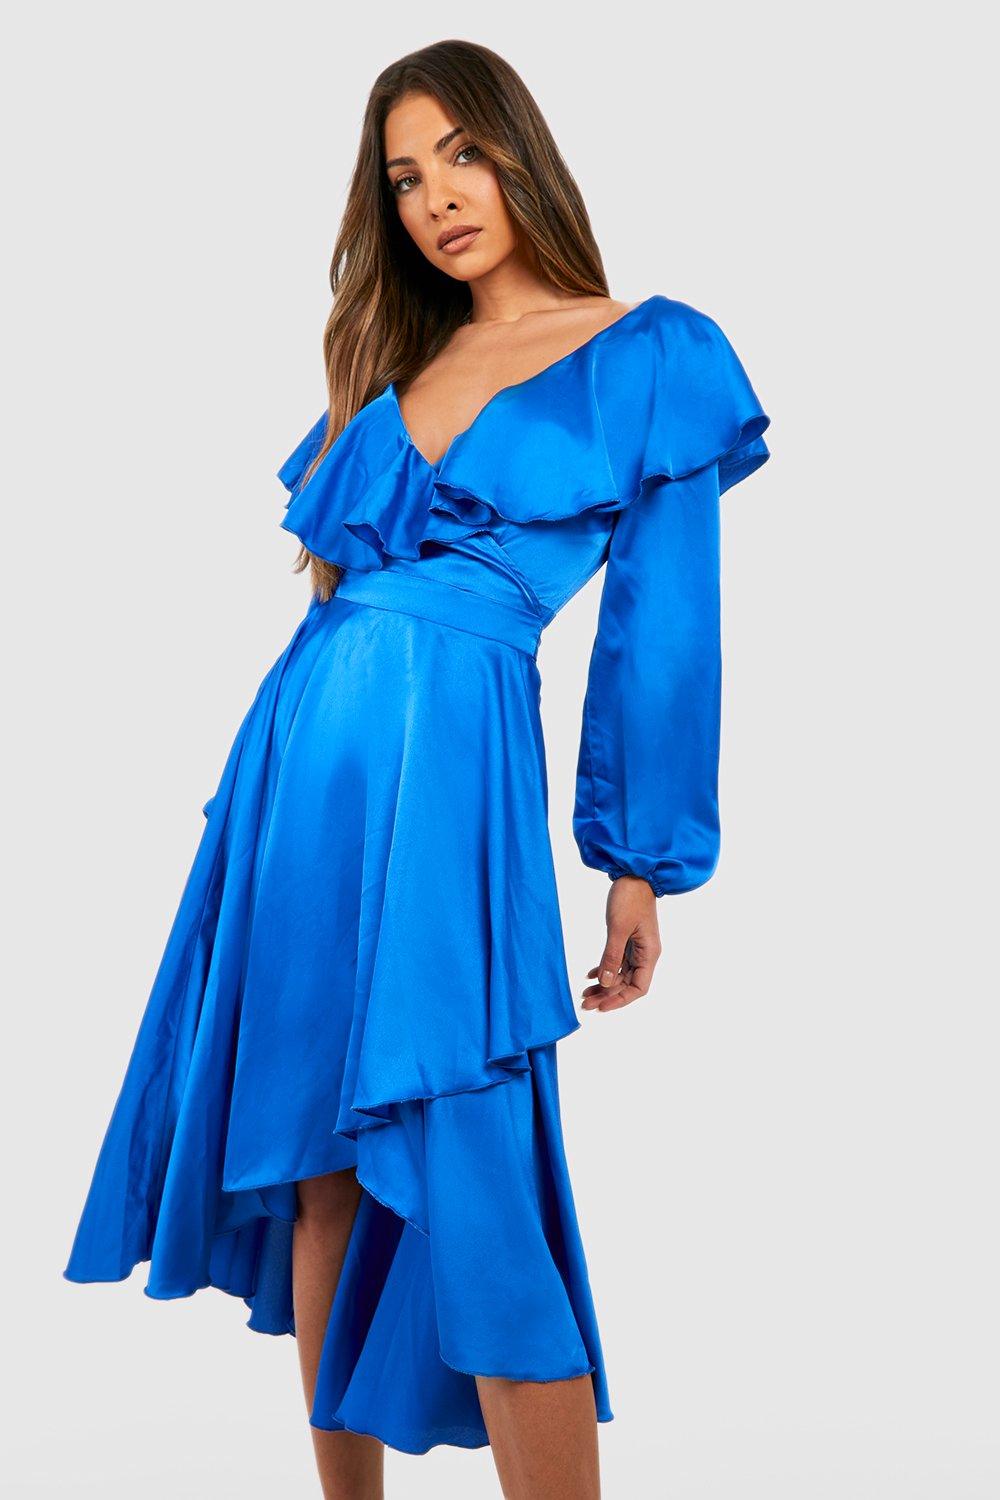 70s Sequin Dresses, Disco Dresses Womens Long Sleeve Satin Ruffle Wrap Skater Dress - Blue - 10 $50.00 AT vintagedancer.com